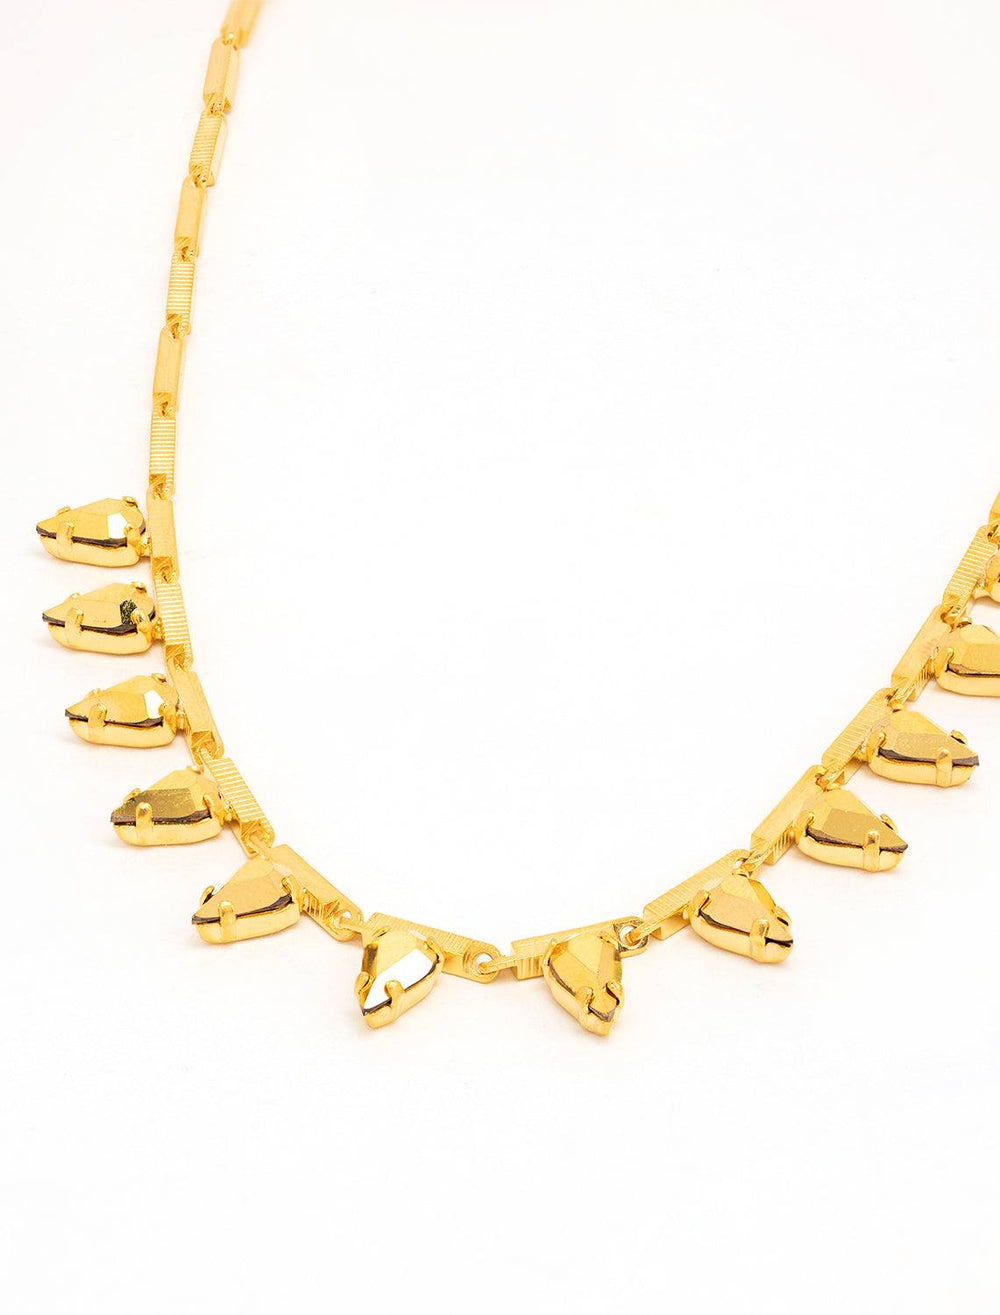 Elizabeth Cole rey necklace in gold - Twigs